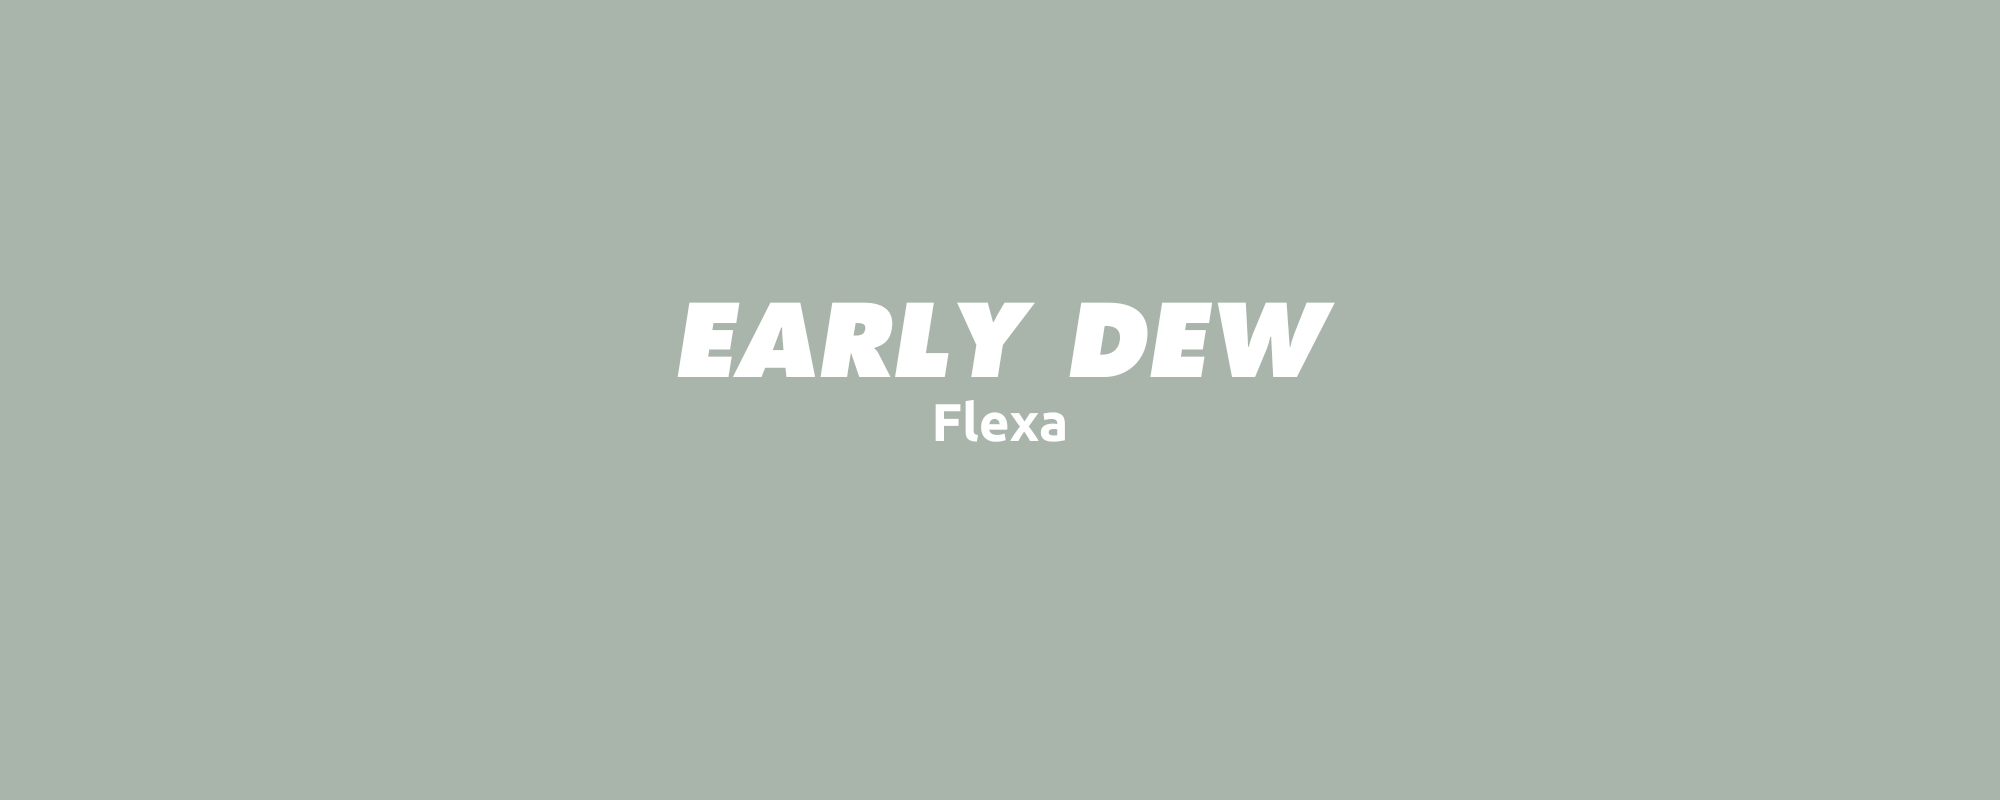 Early Dew Flexa